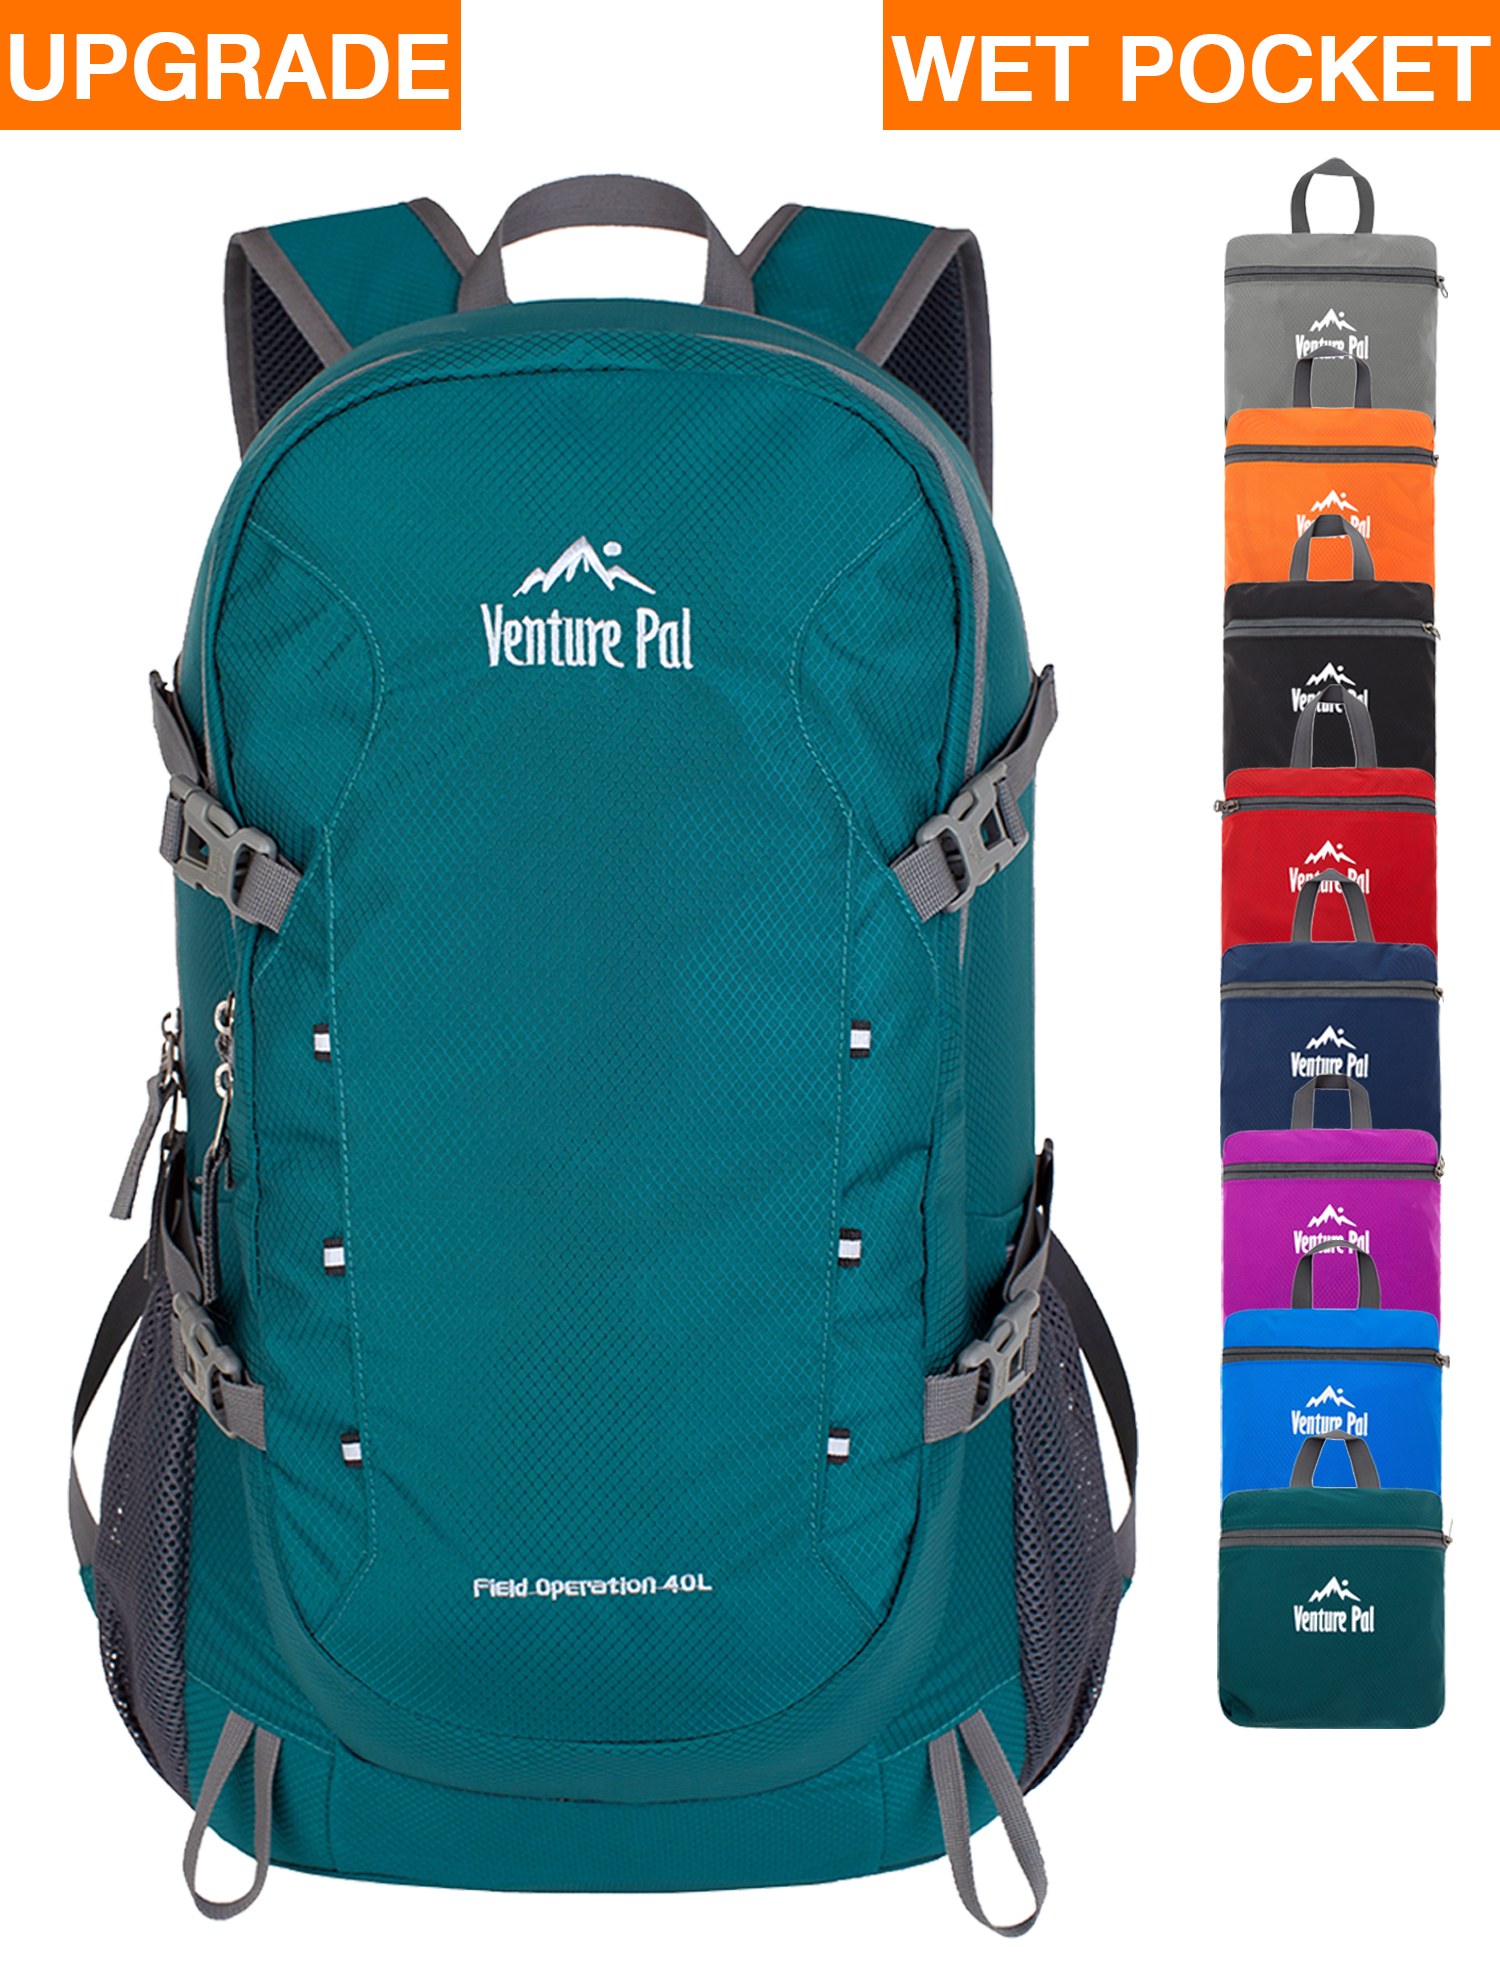 Venture Pal 40L Lightweight Packable Travel Hiking Backpack - image 1 of 7